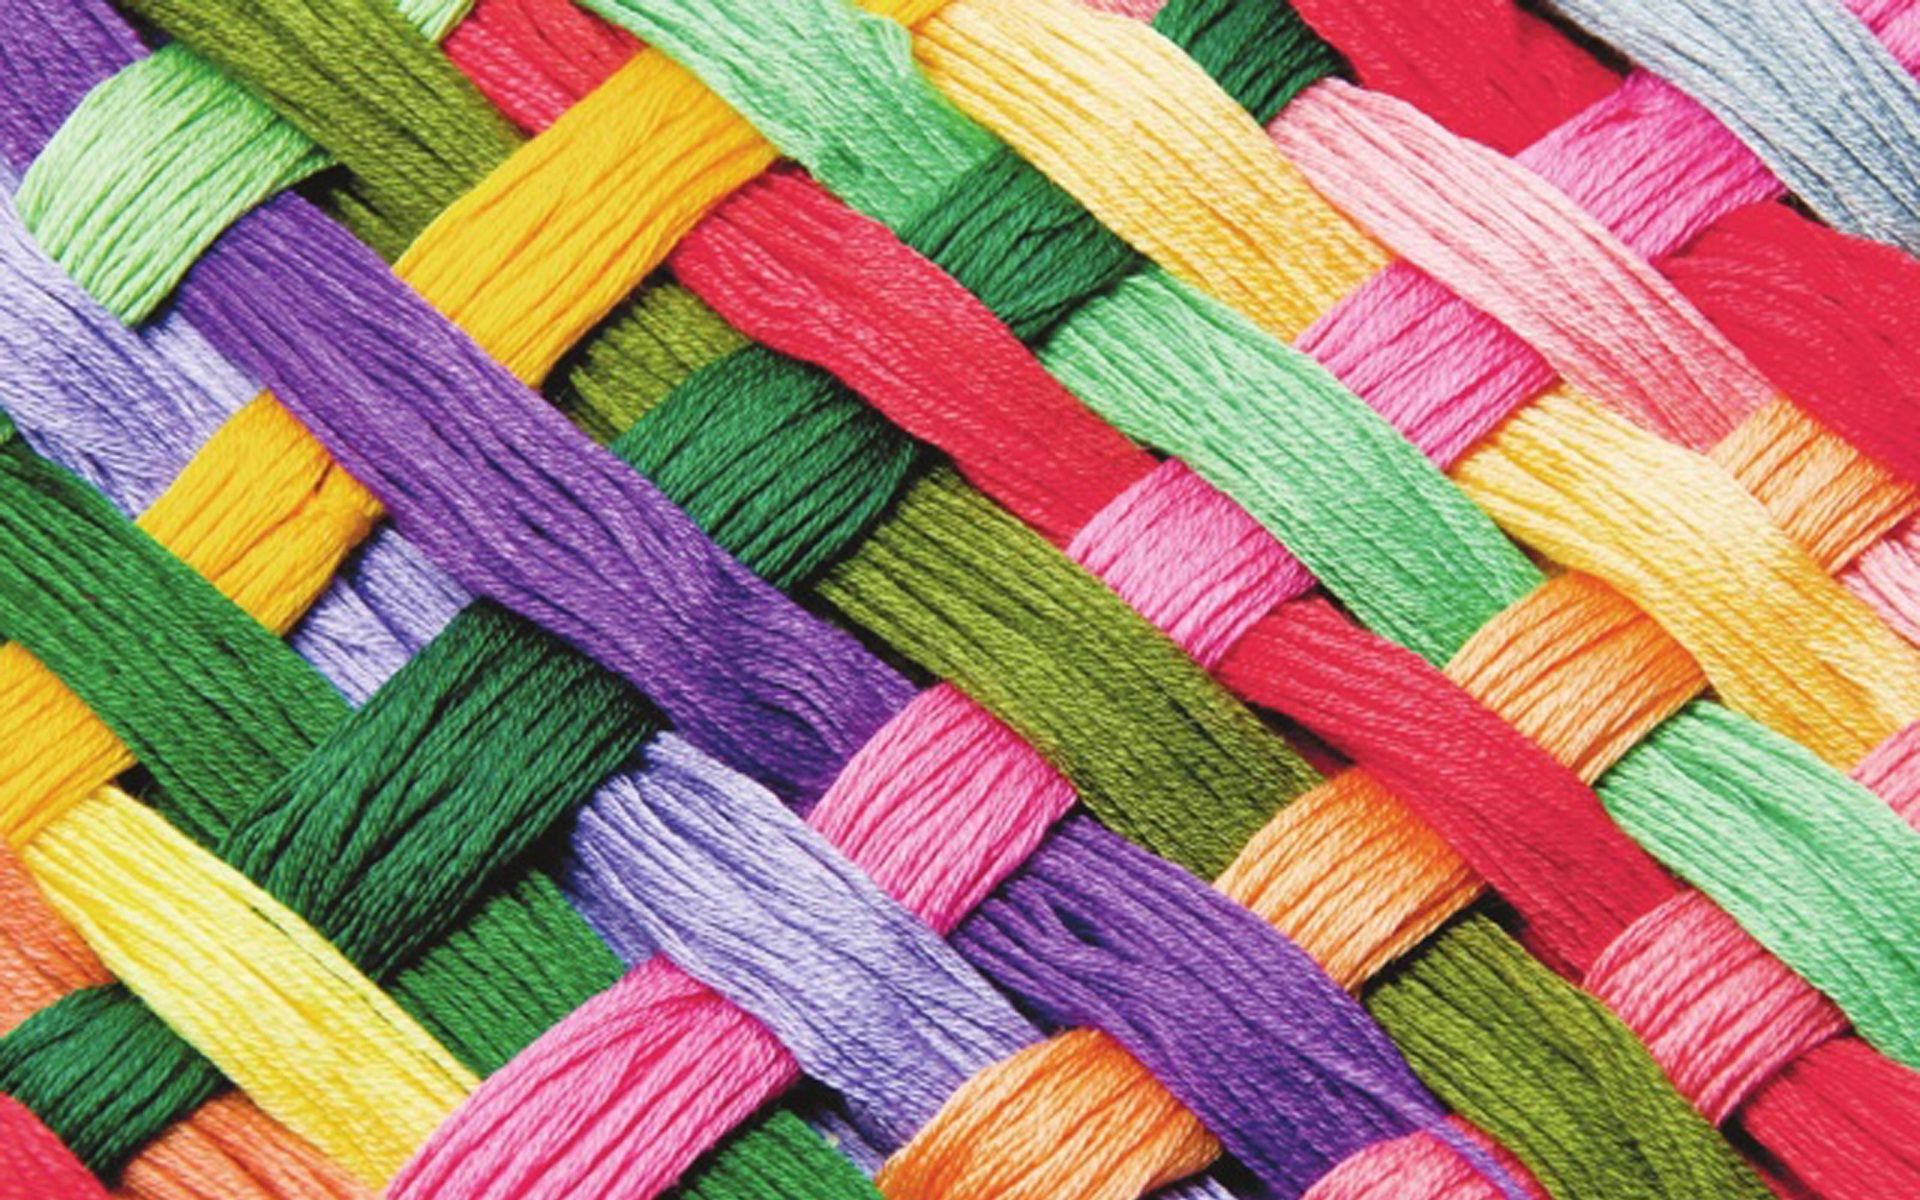 Modern Crochet Stitch Patterns For Beginners